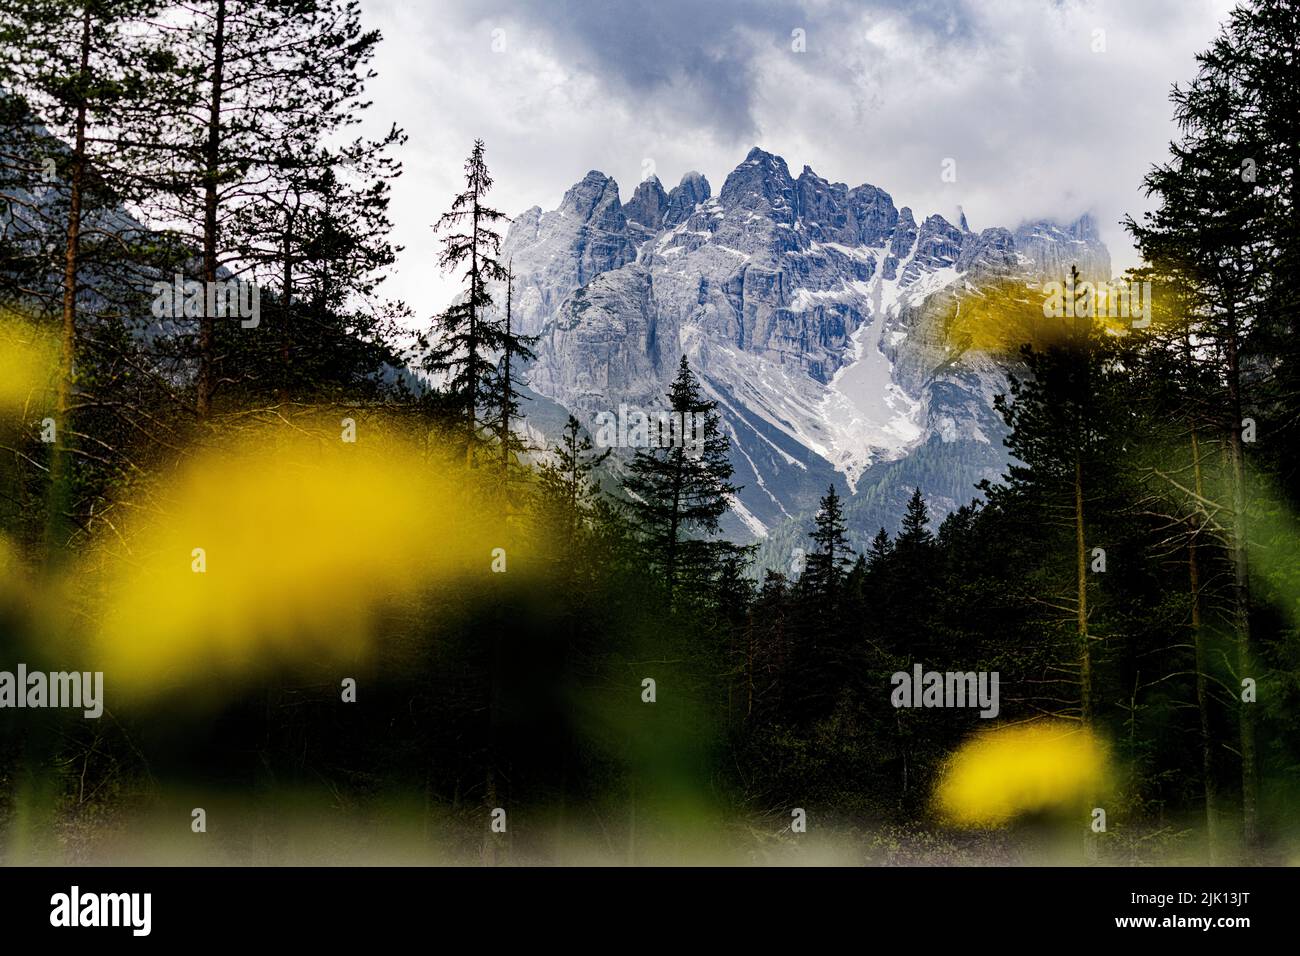 Monte Cristallo and Piz Popena framed by yellow flowers in bloom, Landro, Ampezzo, Dolomites, Veneto, Italy, Europe Stock Photo